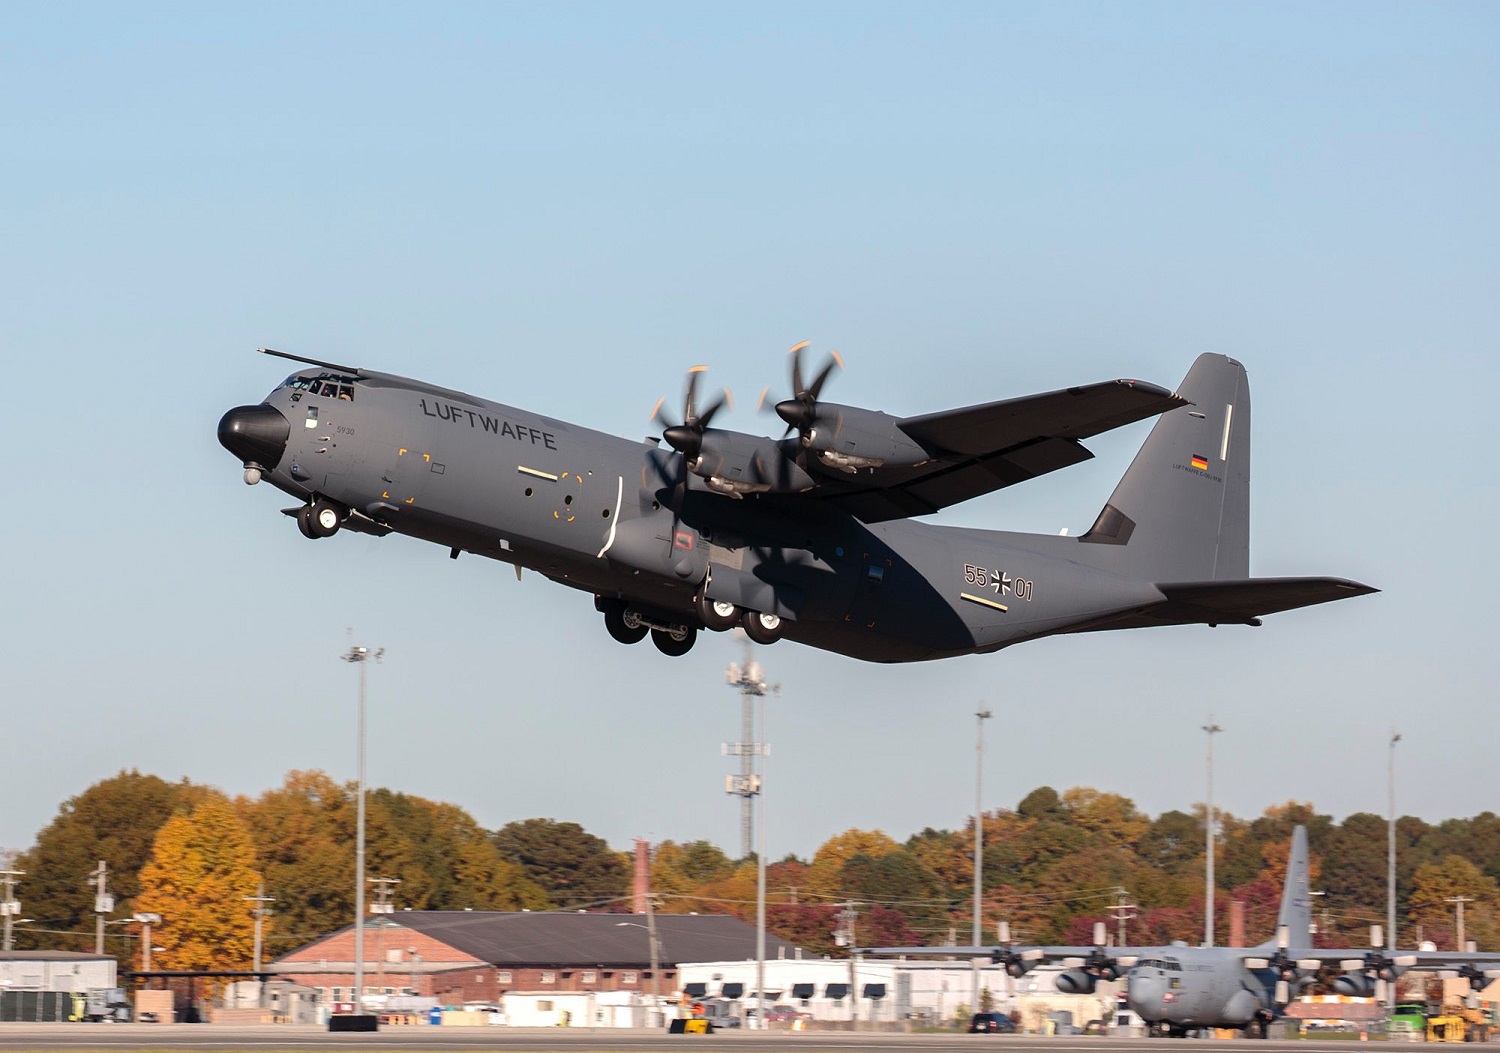 German Air Force Binational Air Transport Squadron Lockheed Martin C-130J Super Hercules military transport aircraft.